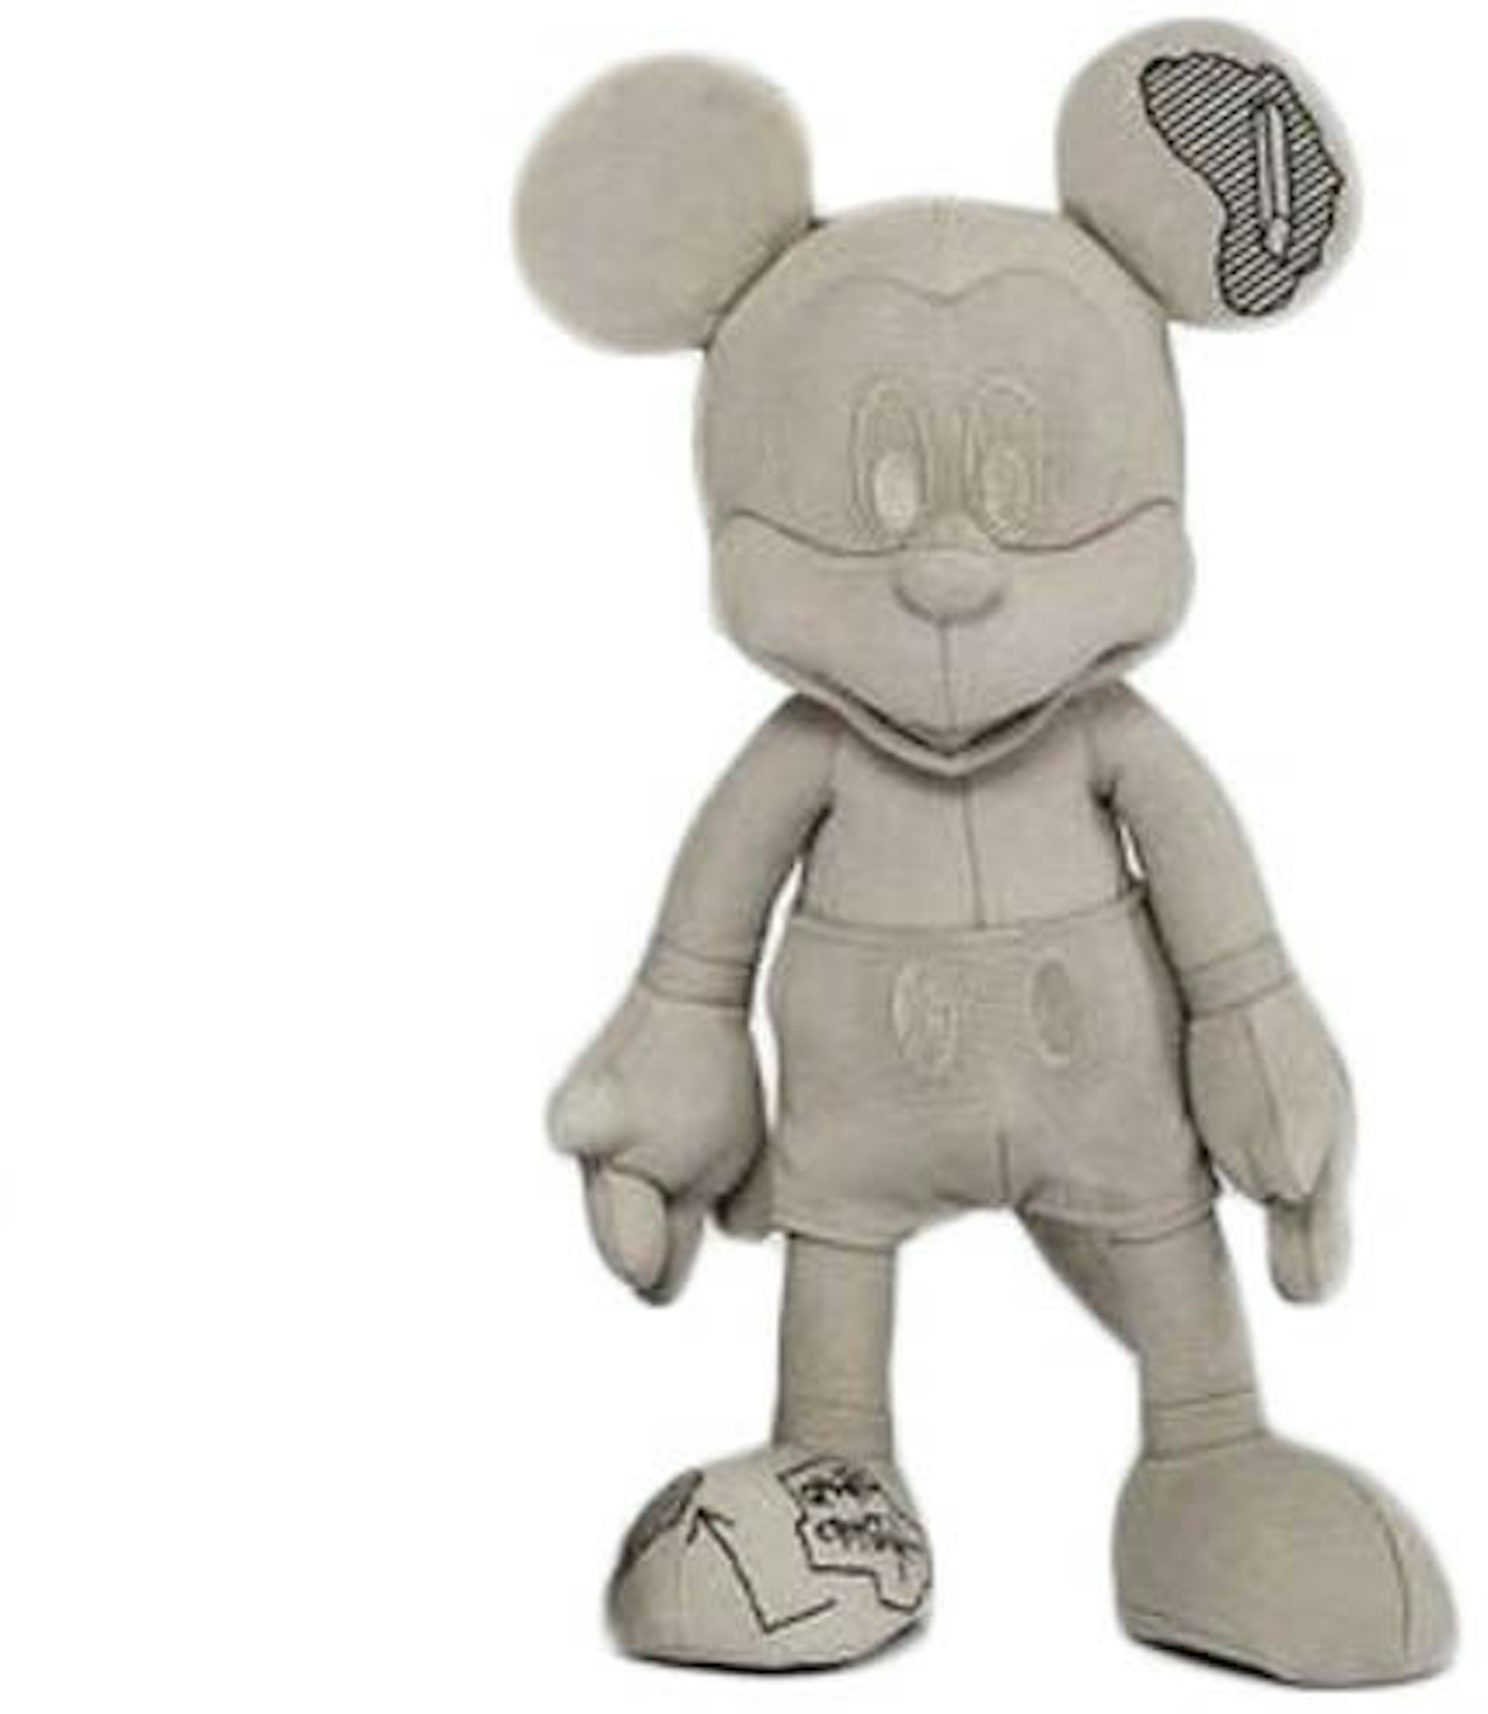 Daniel Arsham x Disney APPortfolio Plush Mickey Figure Small - US